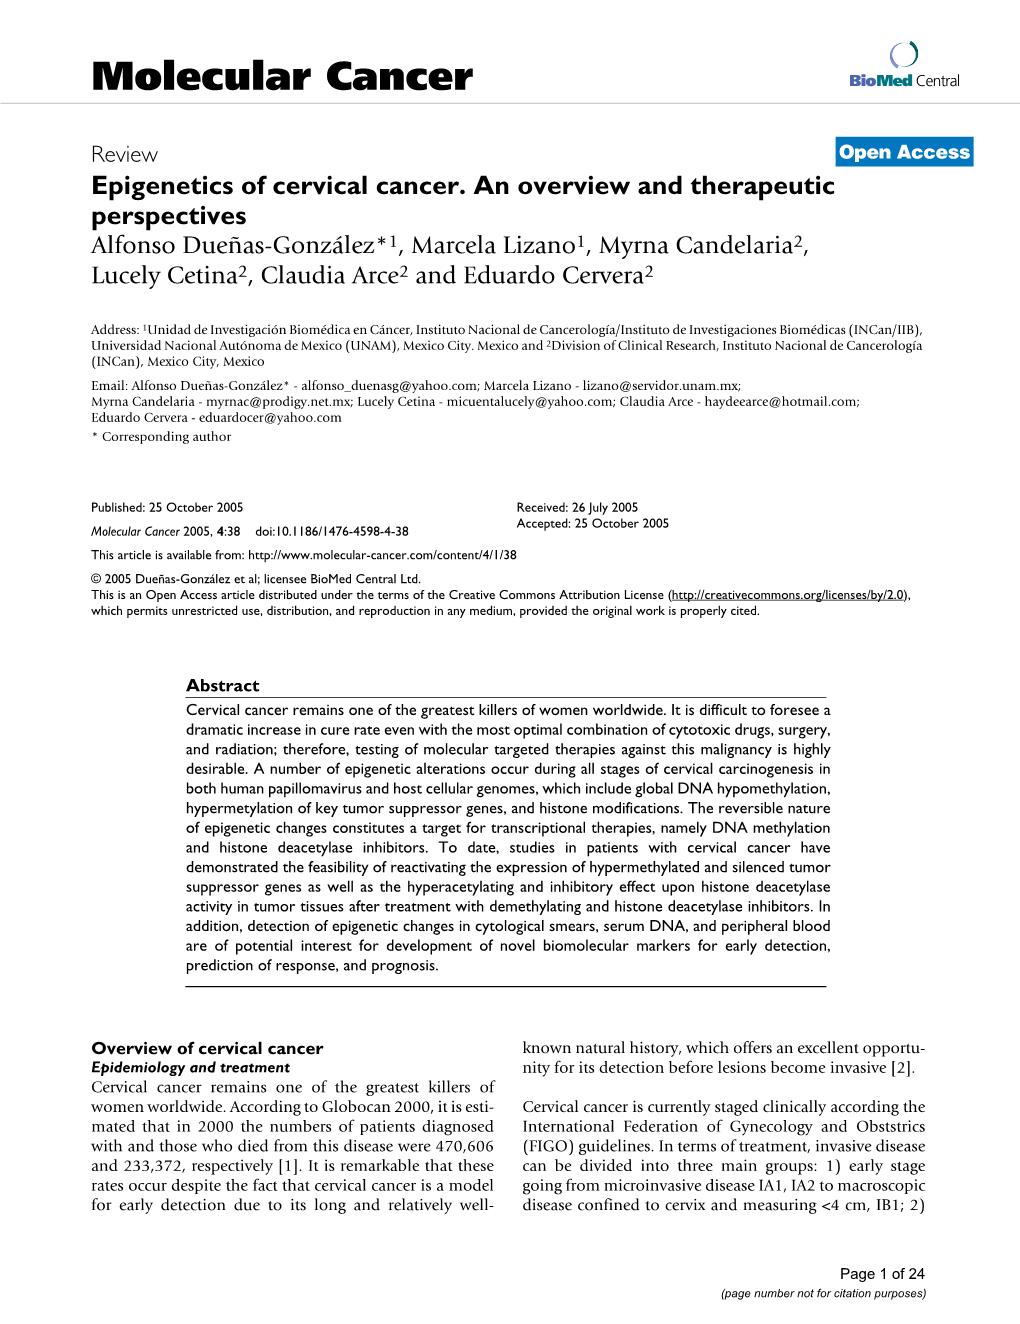 View Open Access Epigenetics of Cervical Cancer